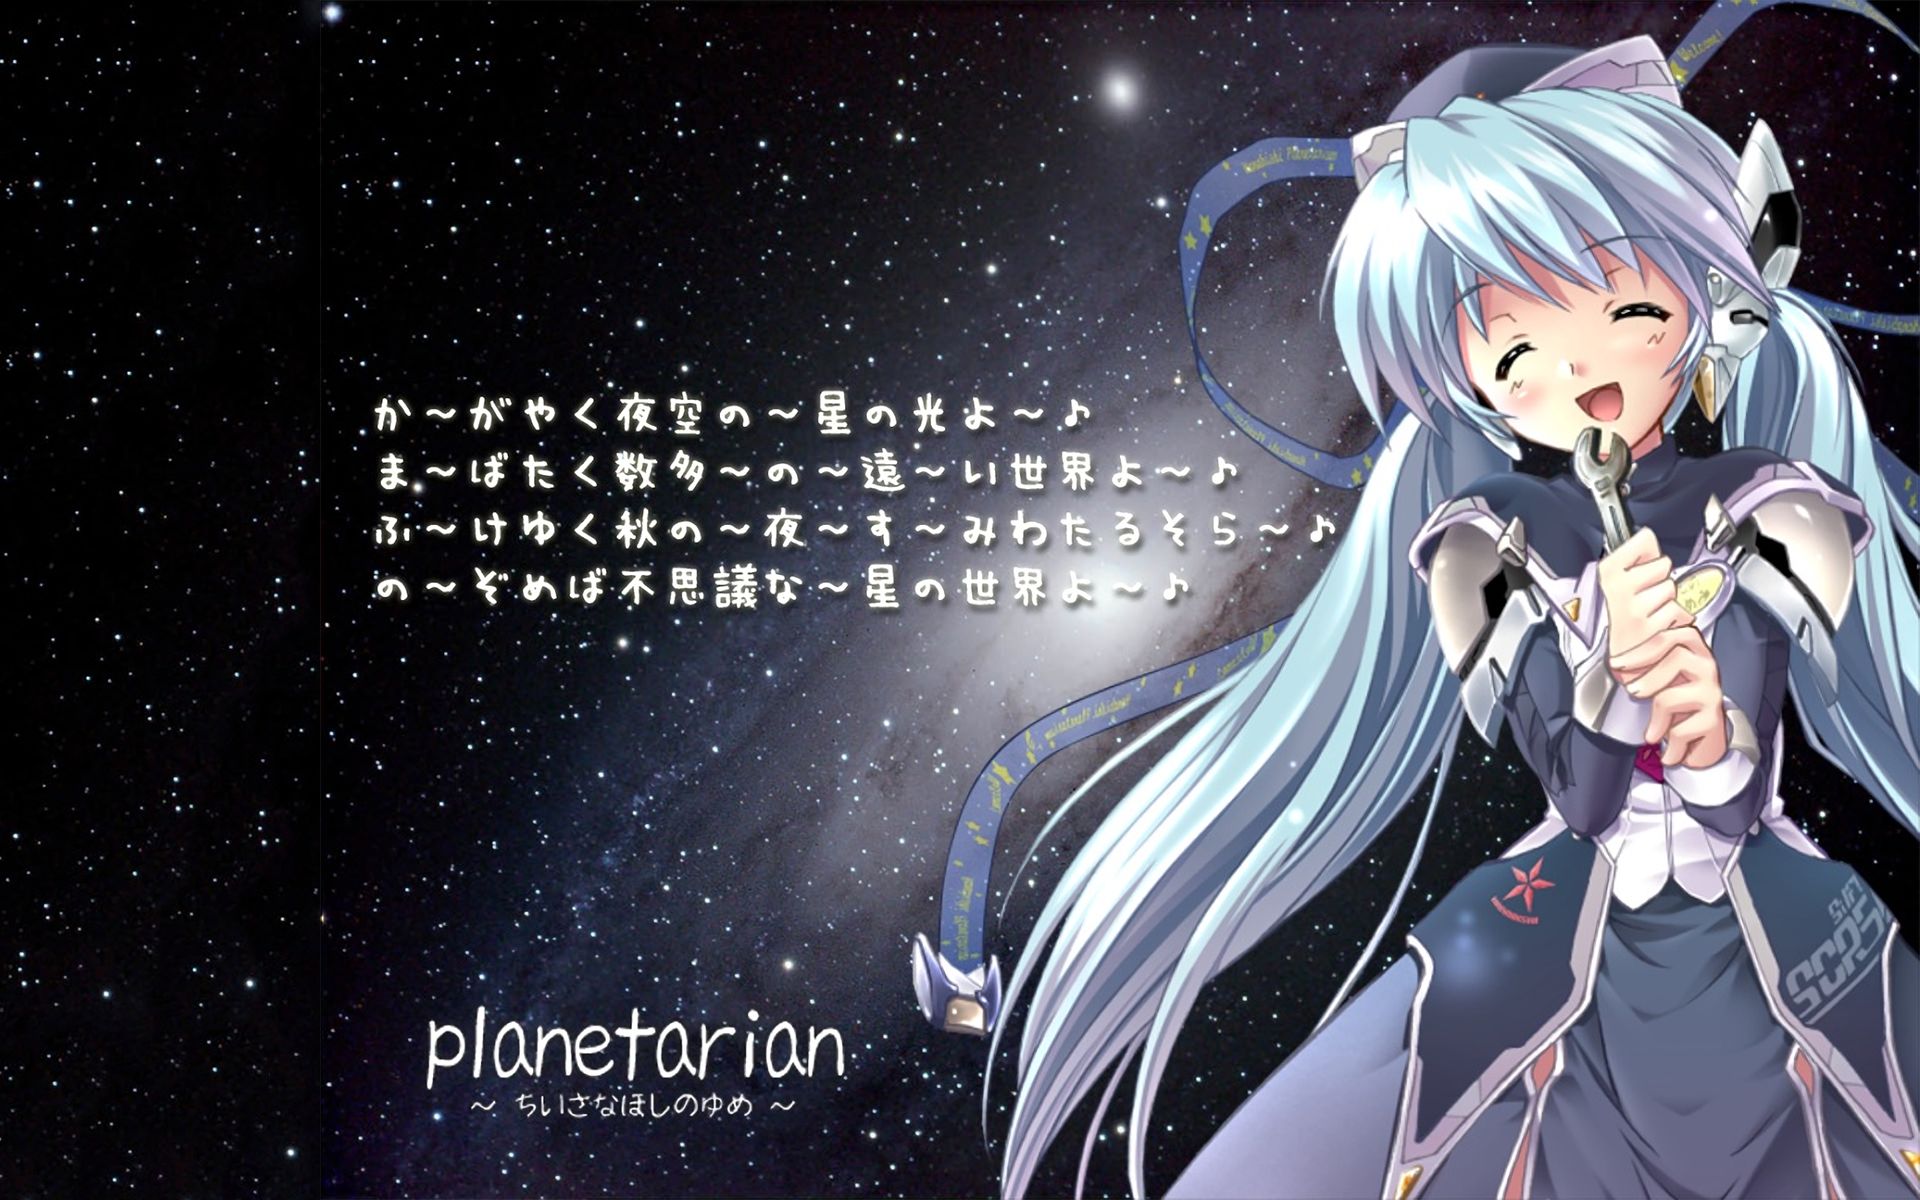 386687 Bild herunterladen animes, planetarian: chiisana hoshi no yume, yumemi hoshino, planetarier - Hintergrundbilder und Bildschirmschoner kostenlos